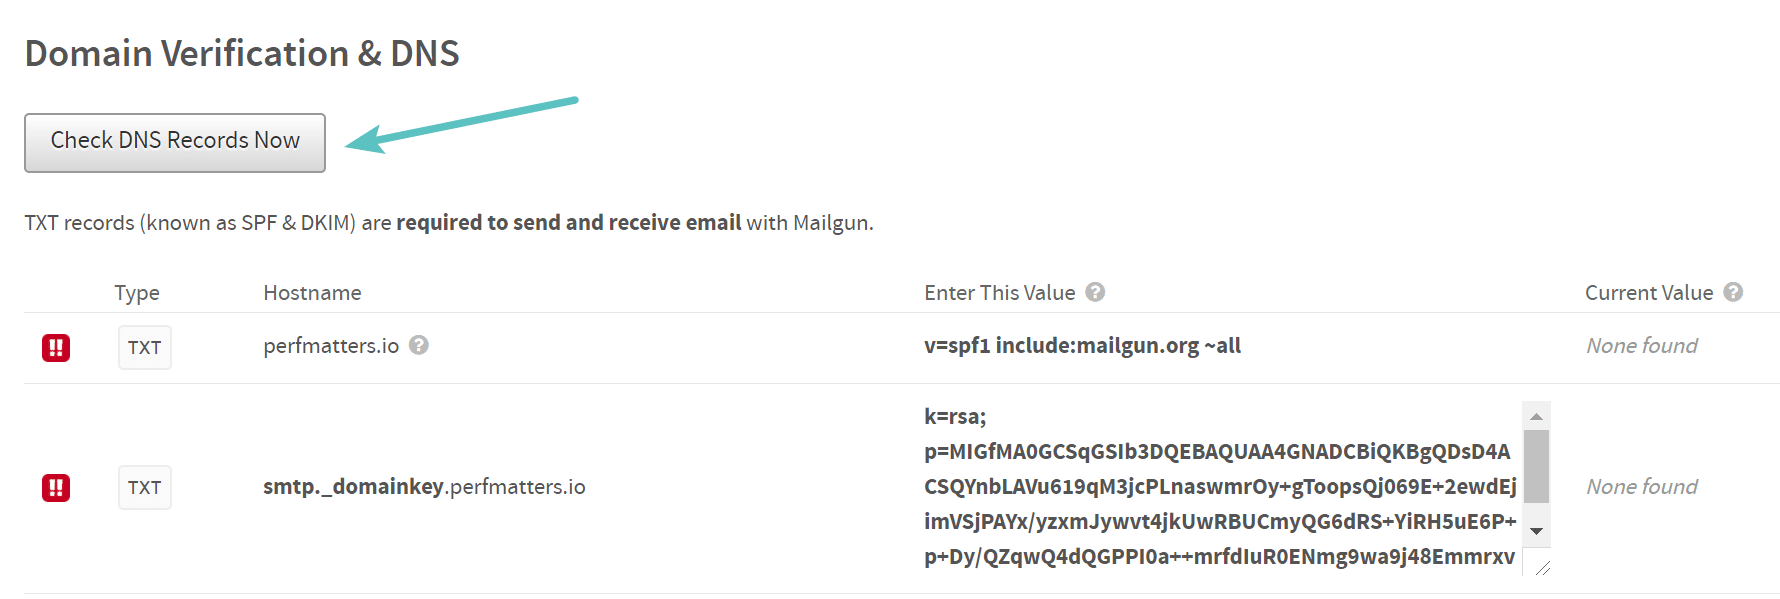 Check DNS records now in Mailgun